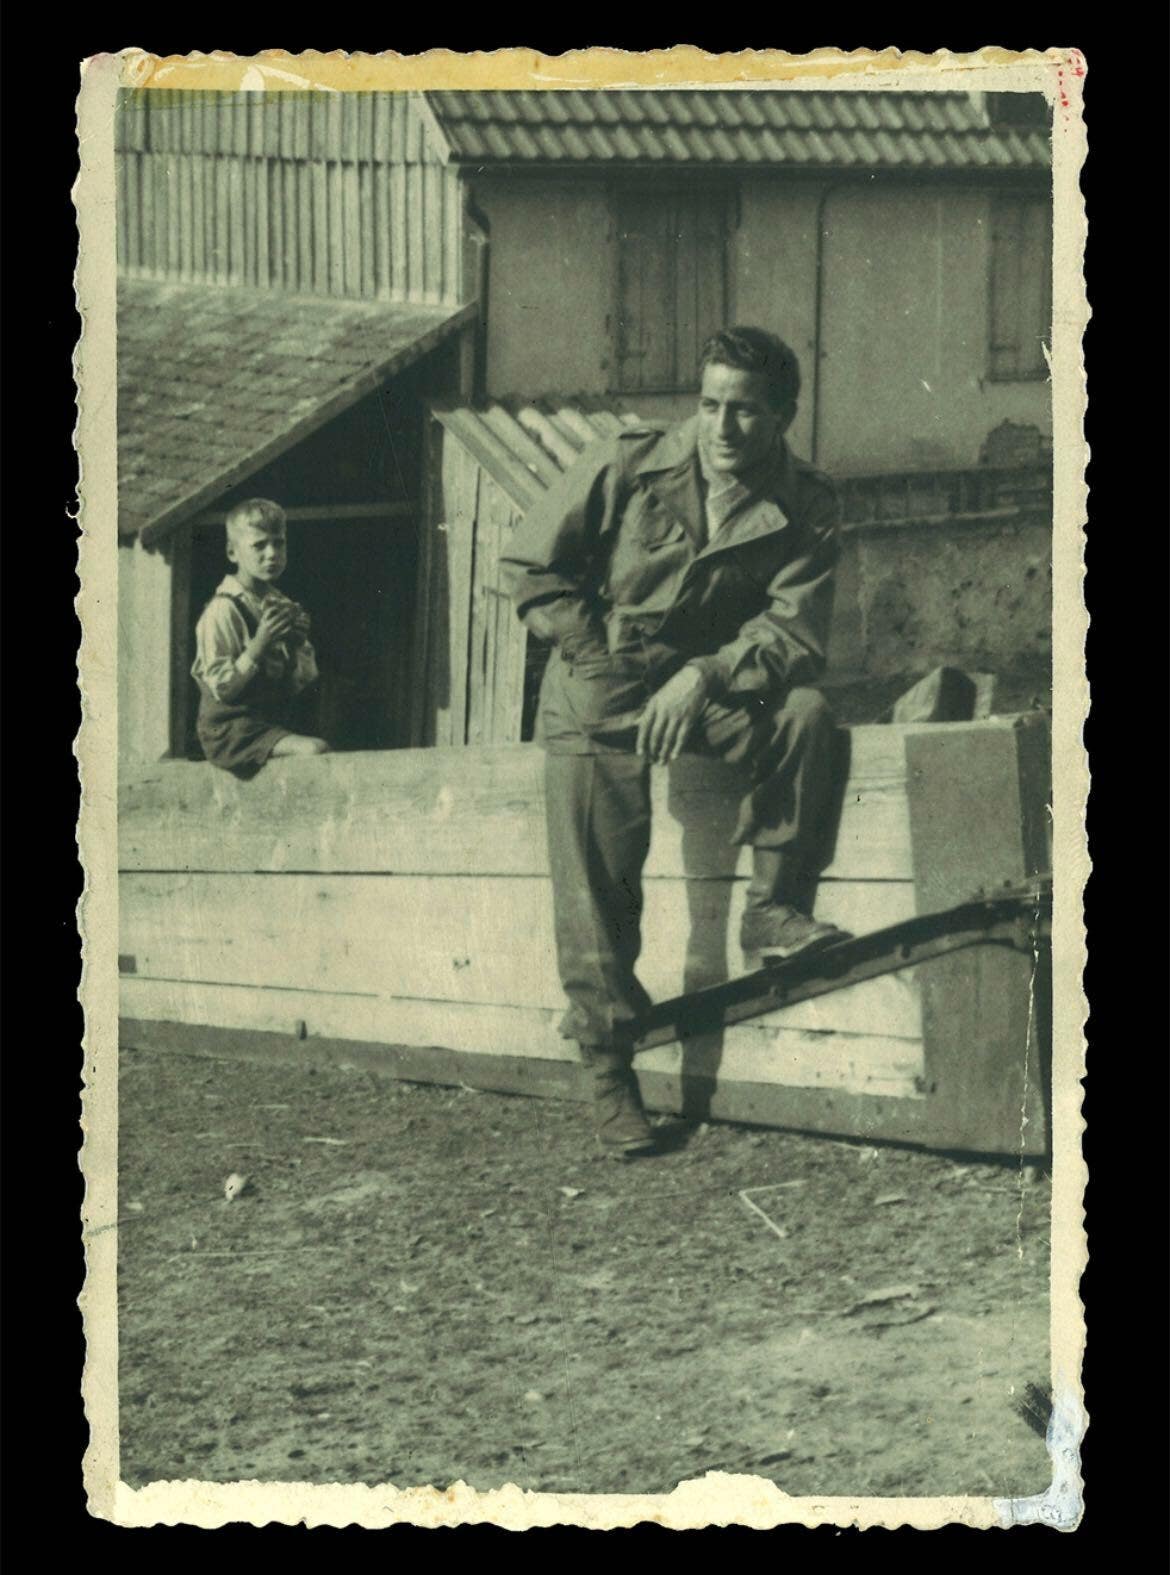 Tony Bennett in uniform during World War 2